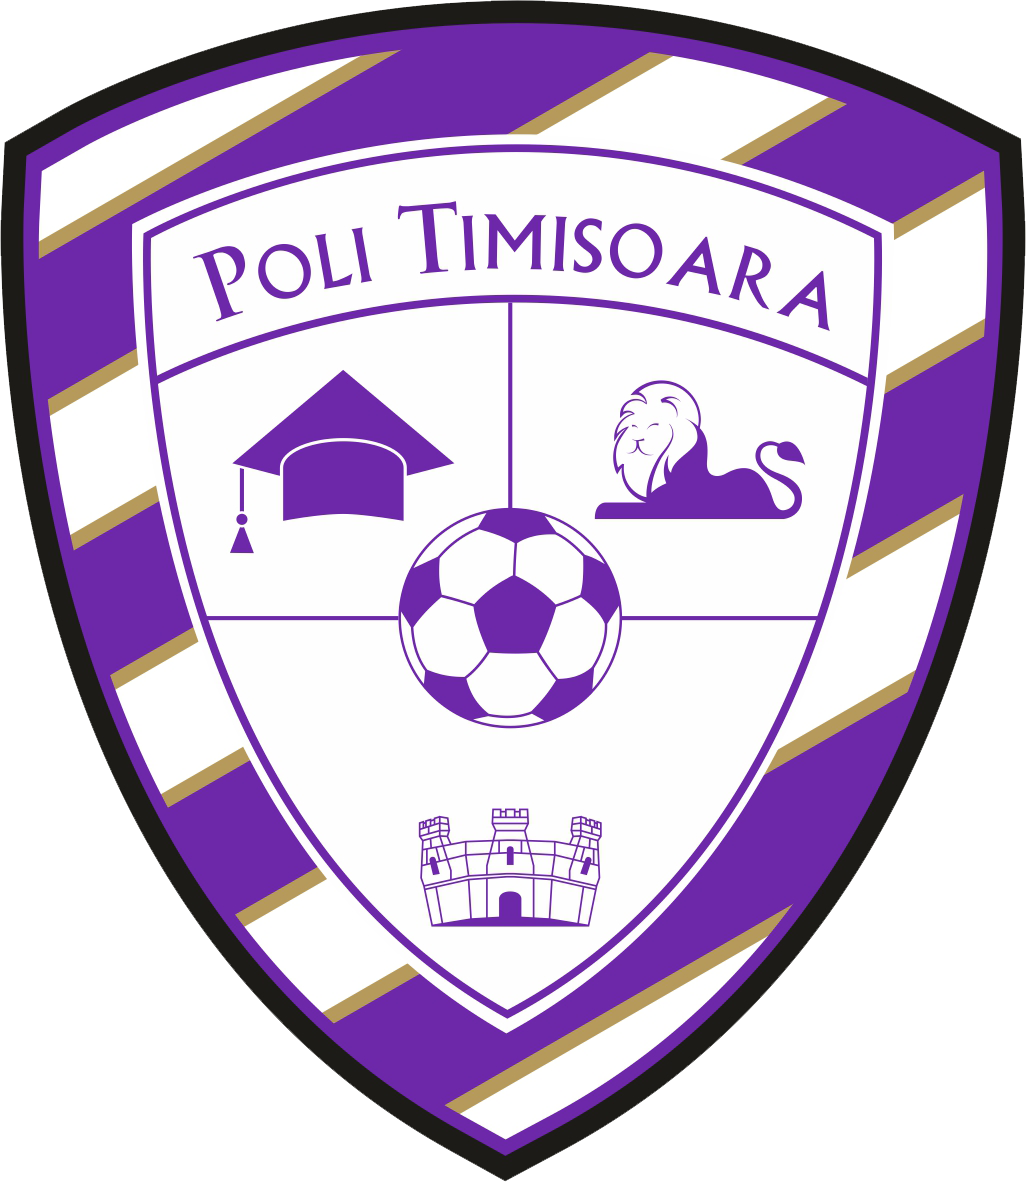 Poli Timisoara logo